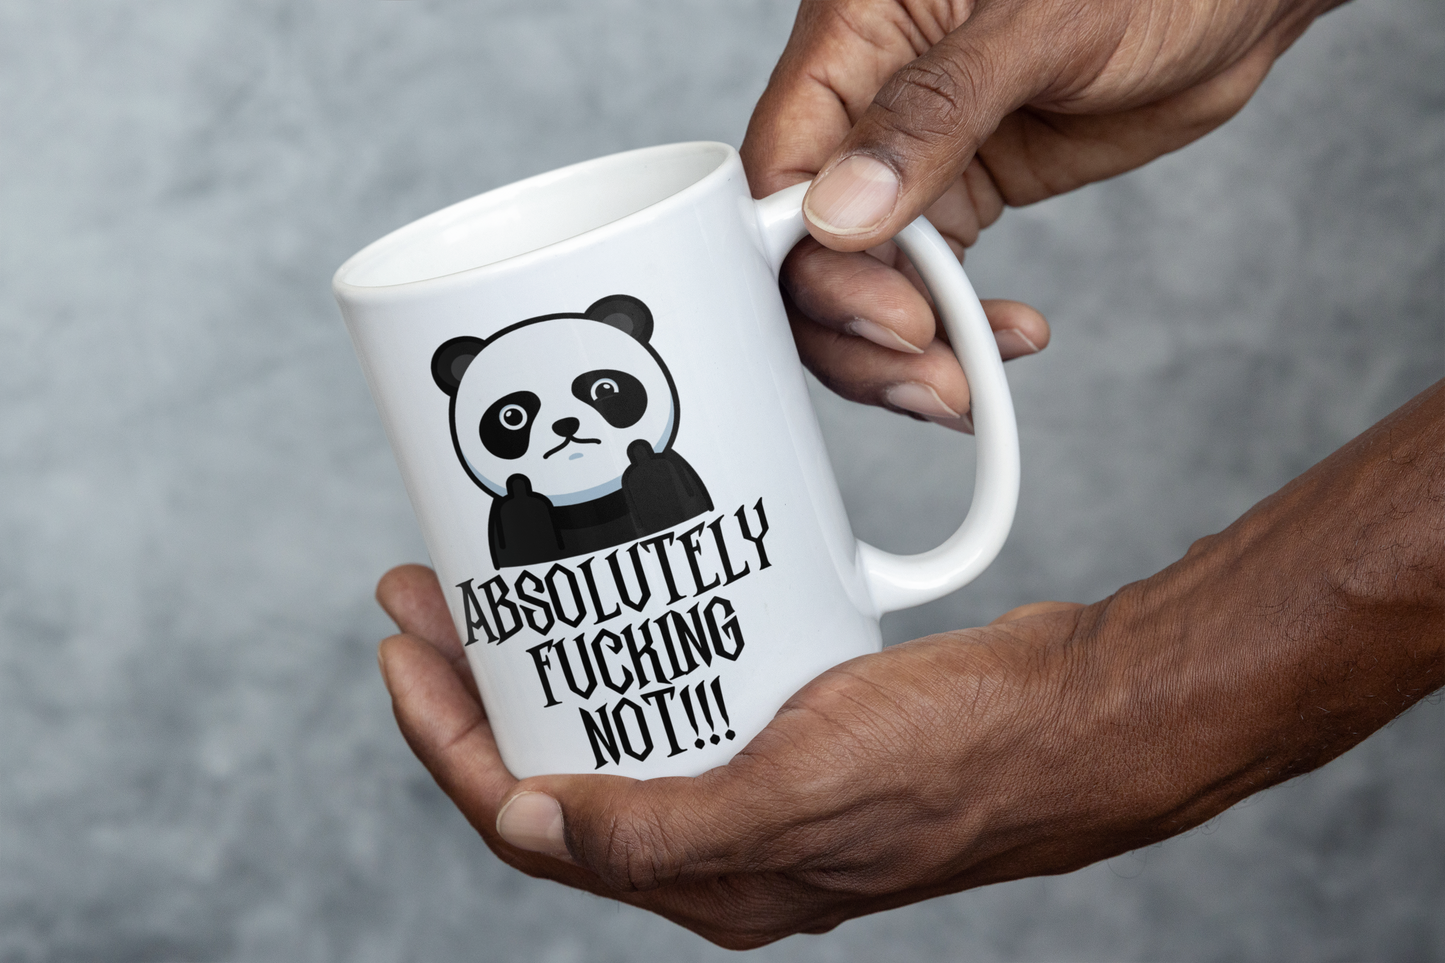 absolutely fucking not funny rude coffee mug